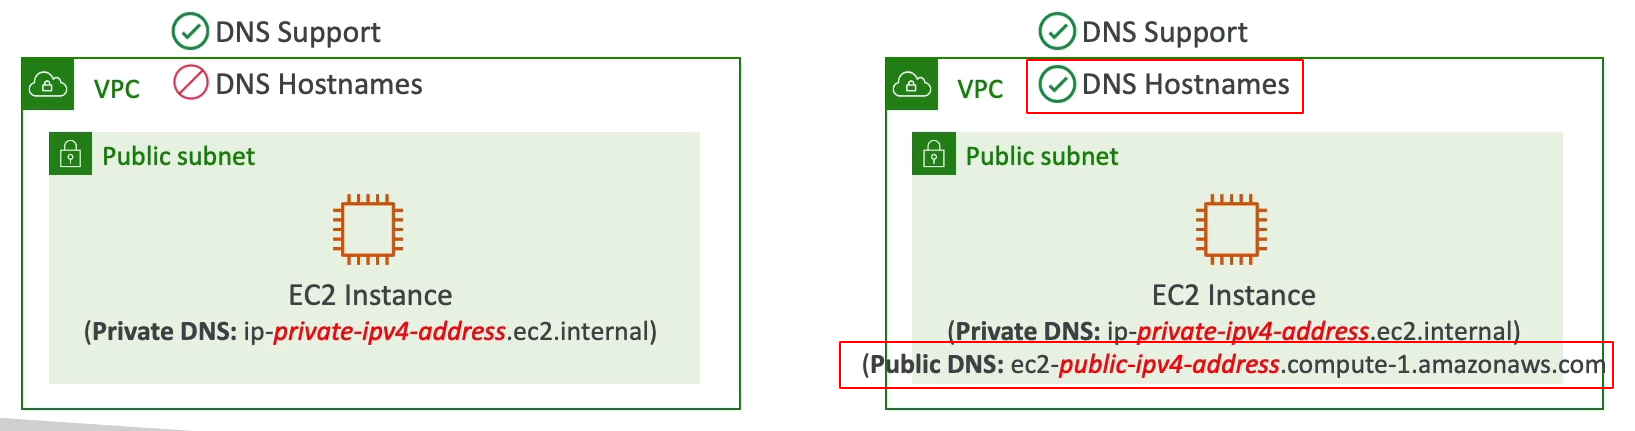 VPC - DNS resolution